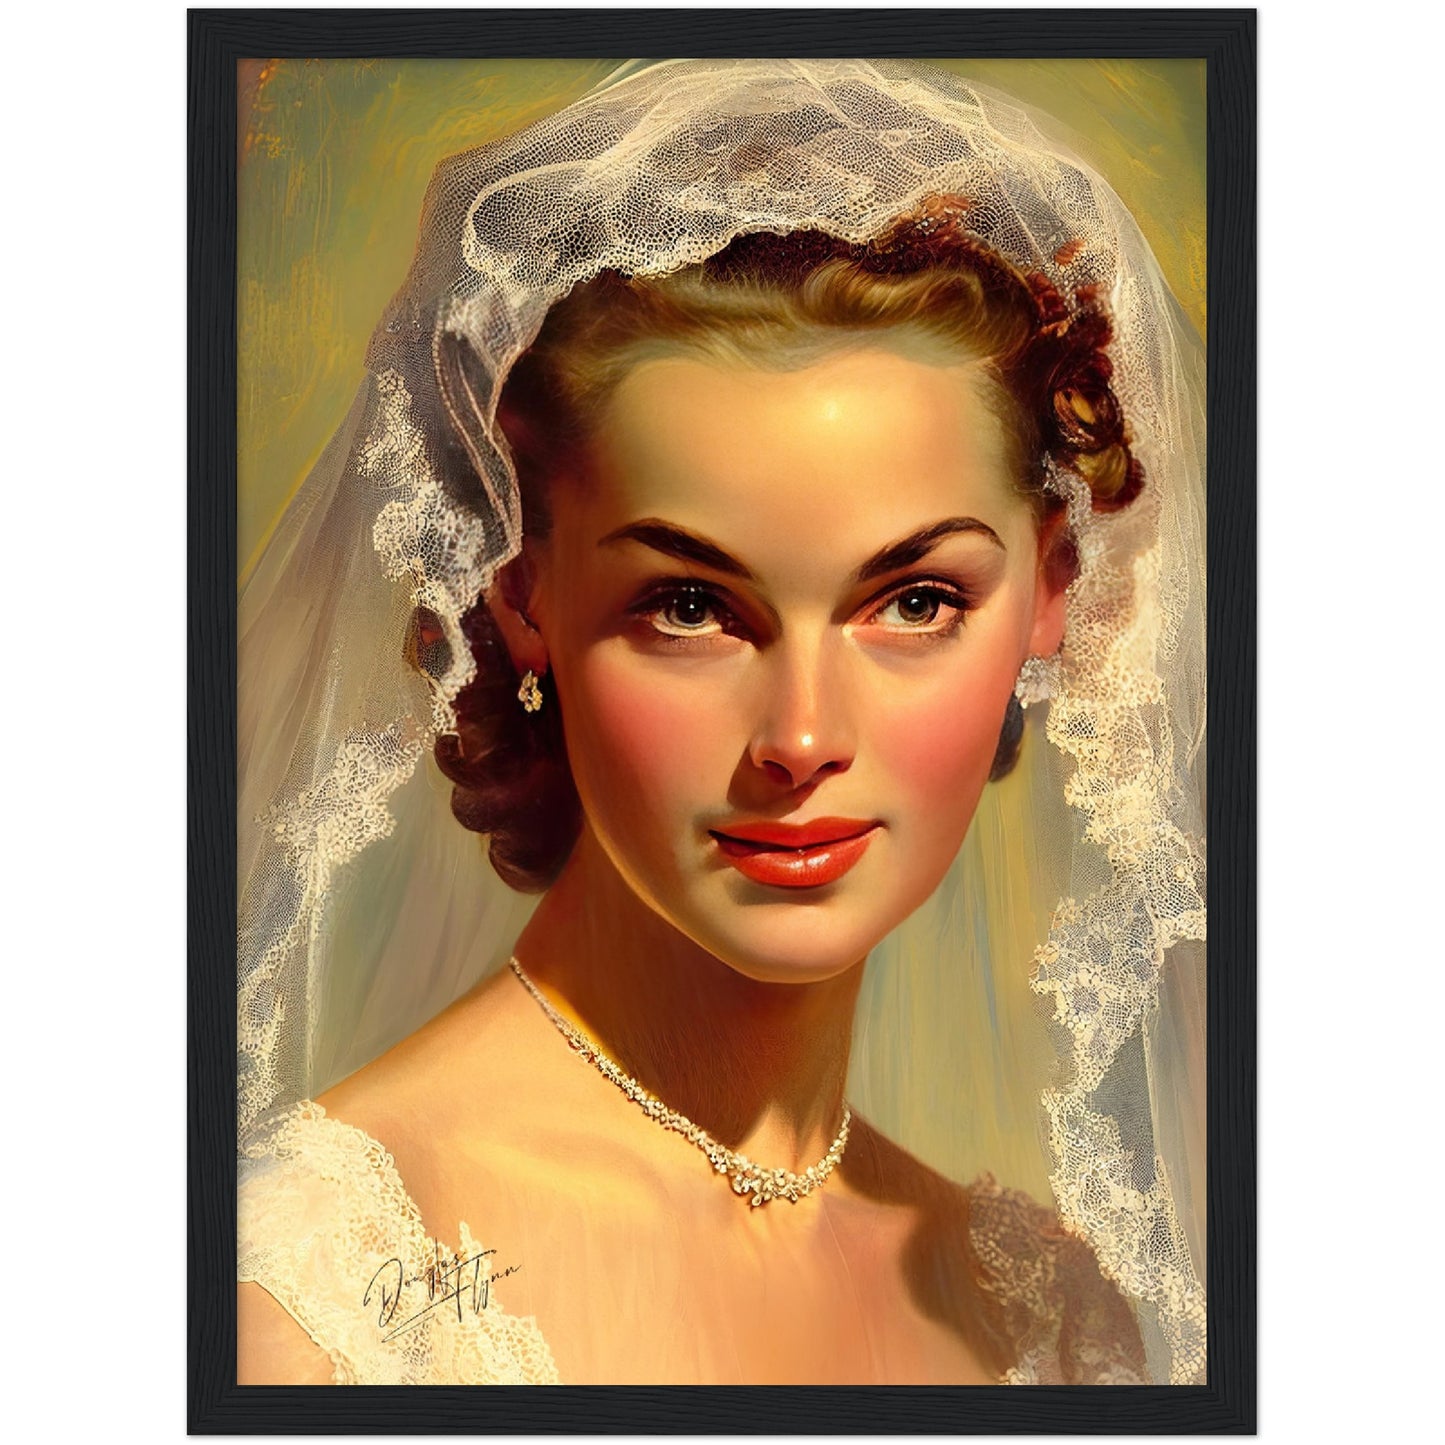 »Wedding Memories« retro poster